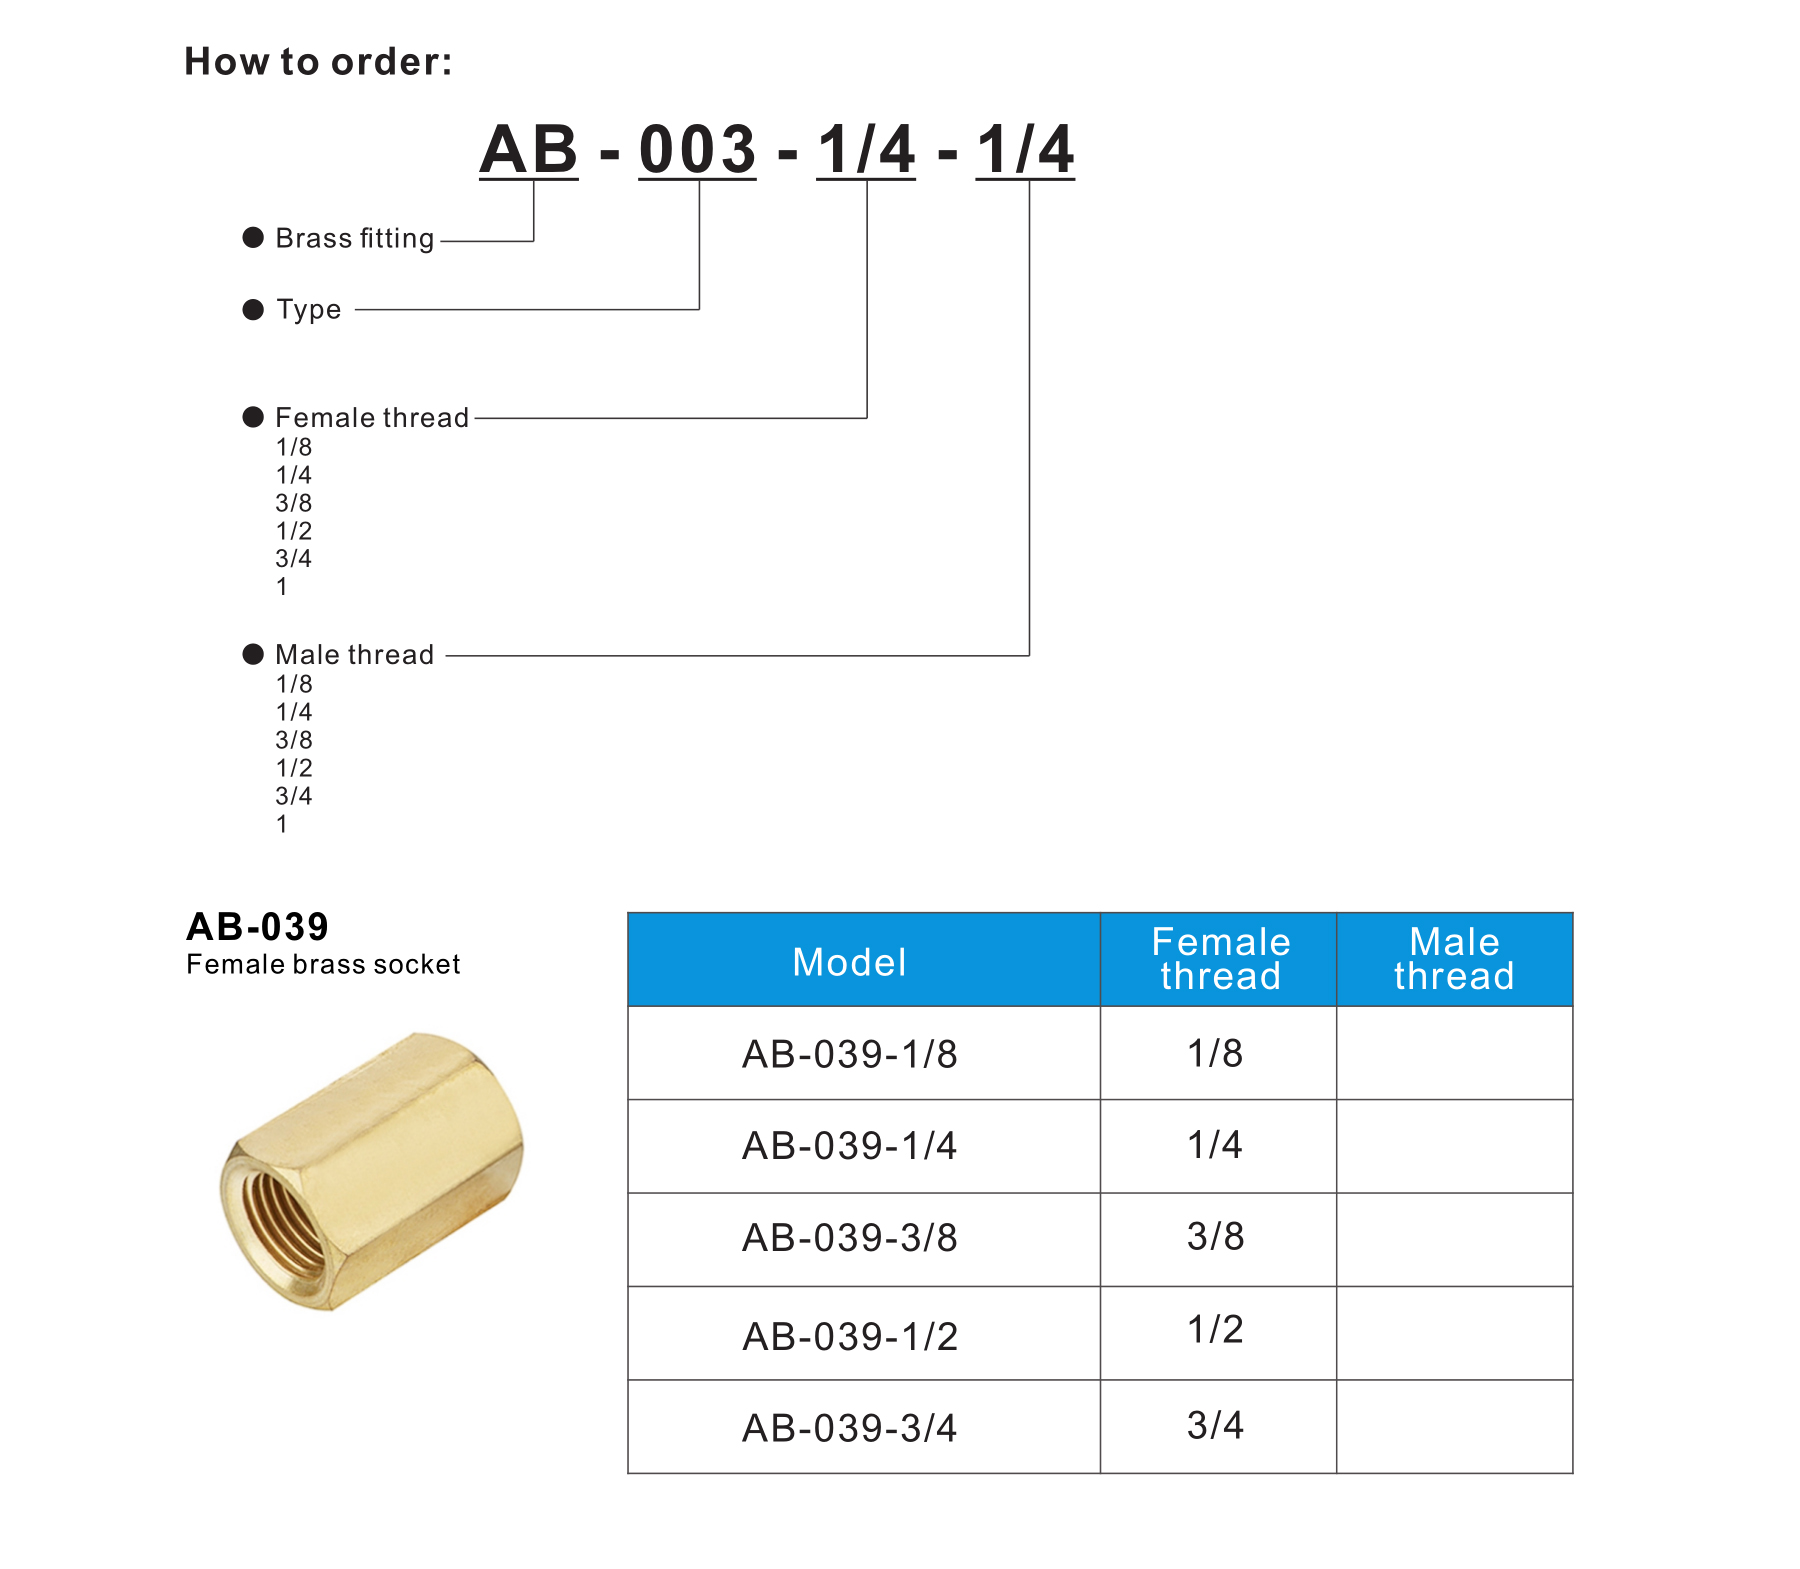 AB-039 Female brass socket